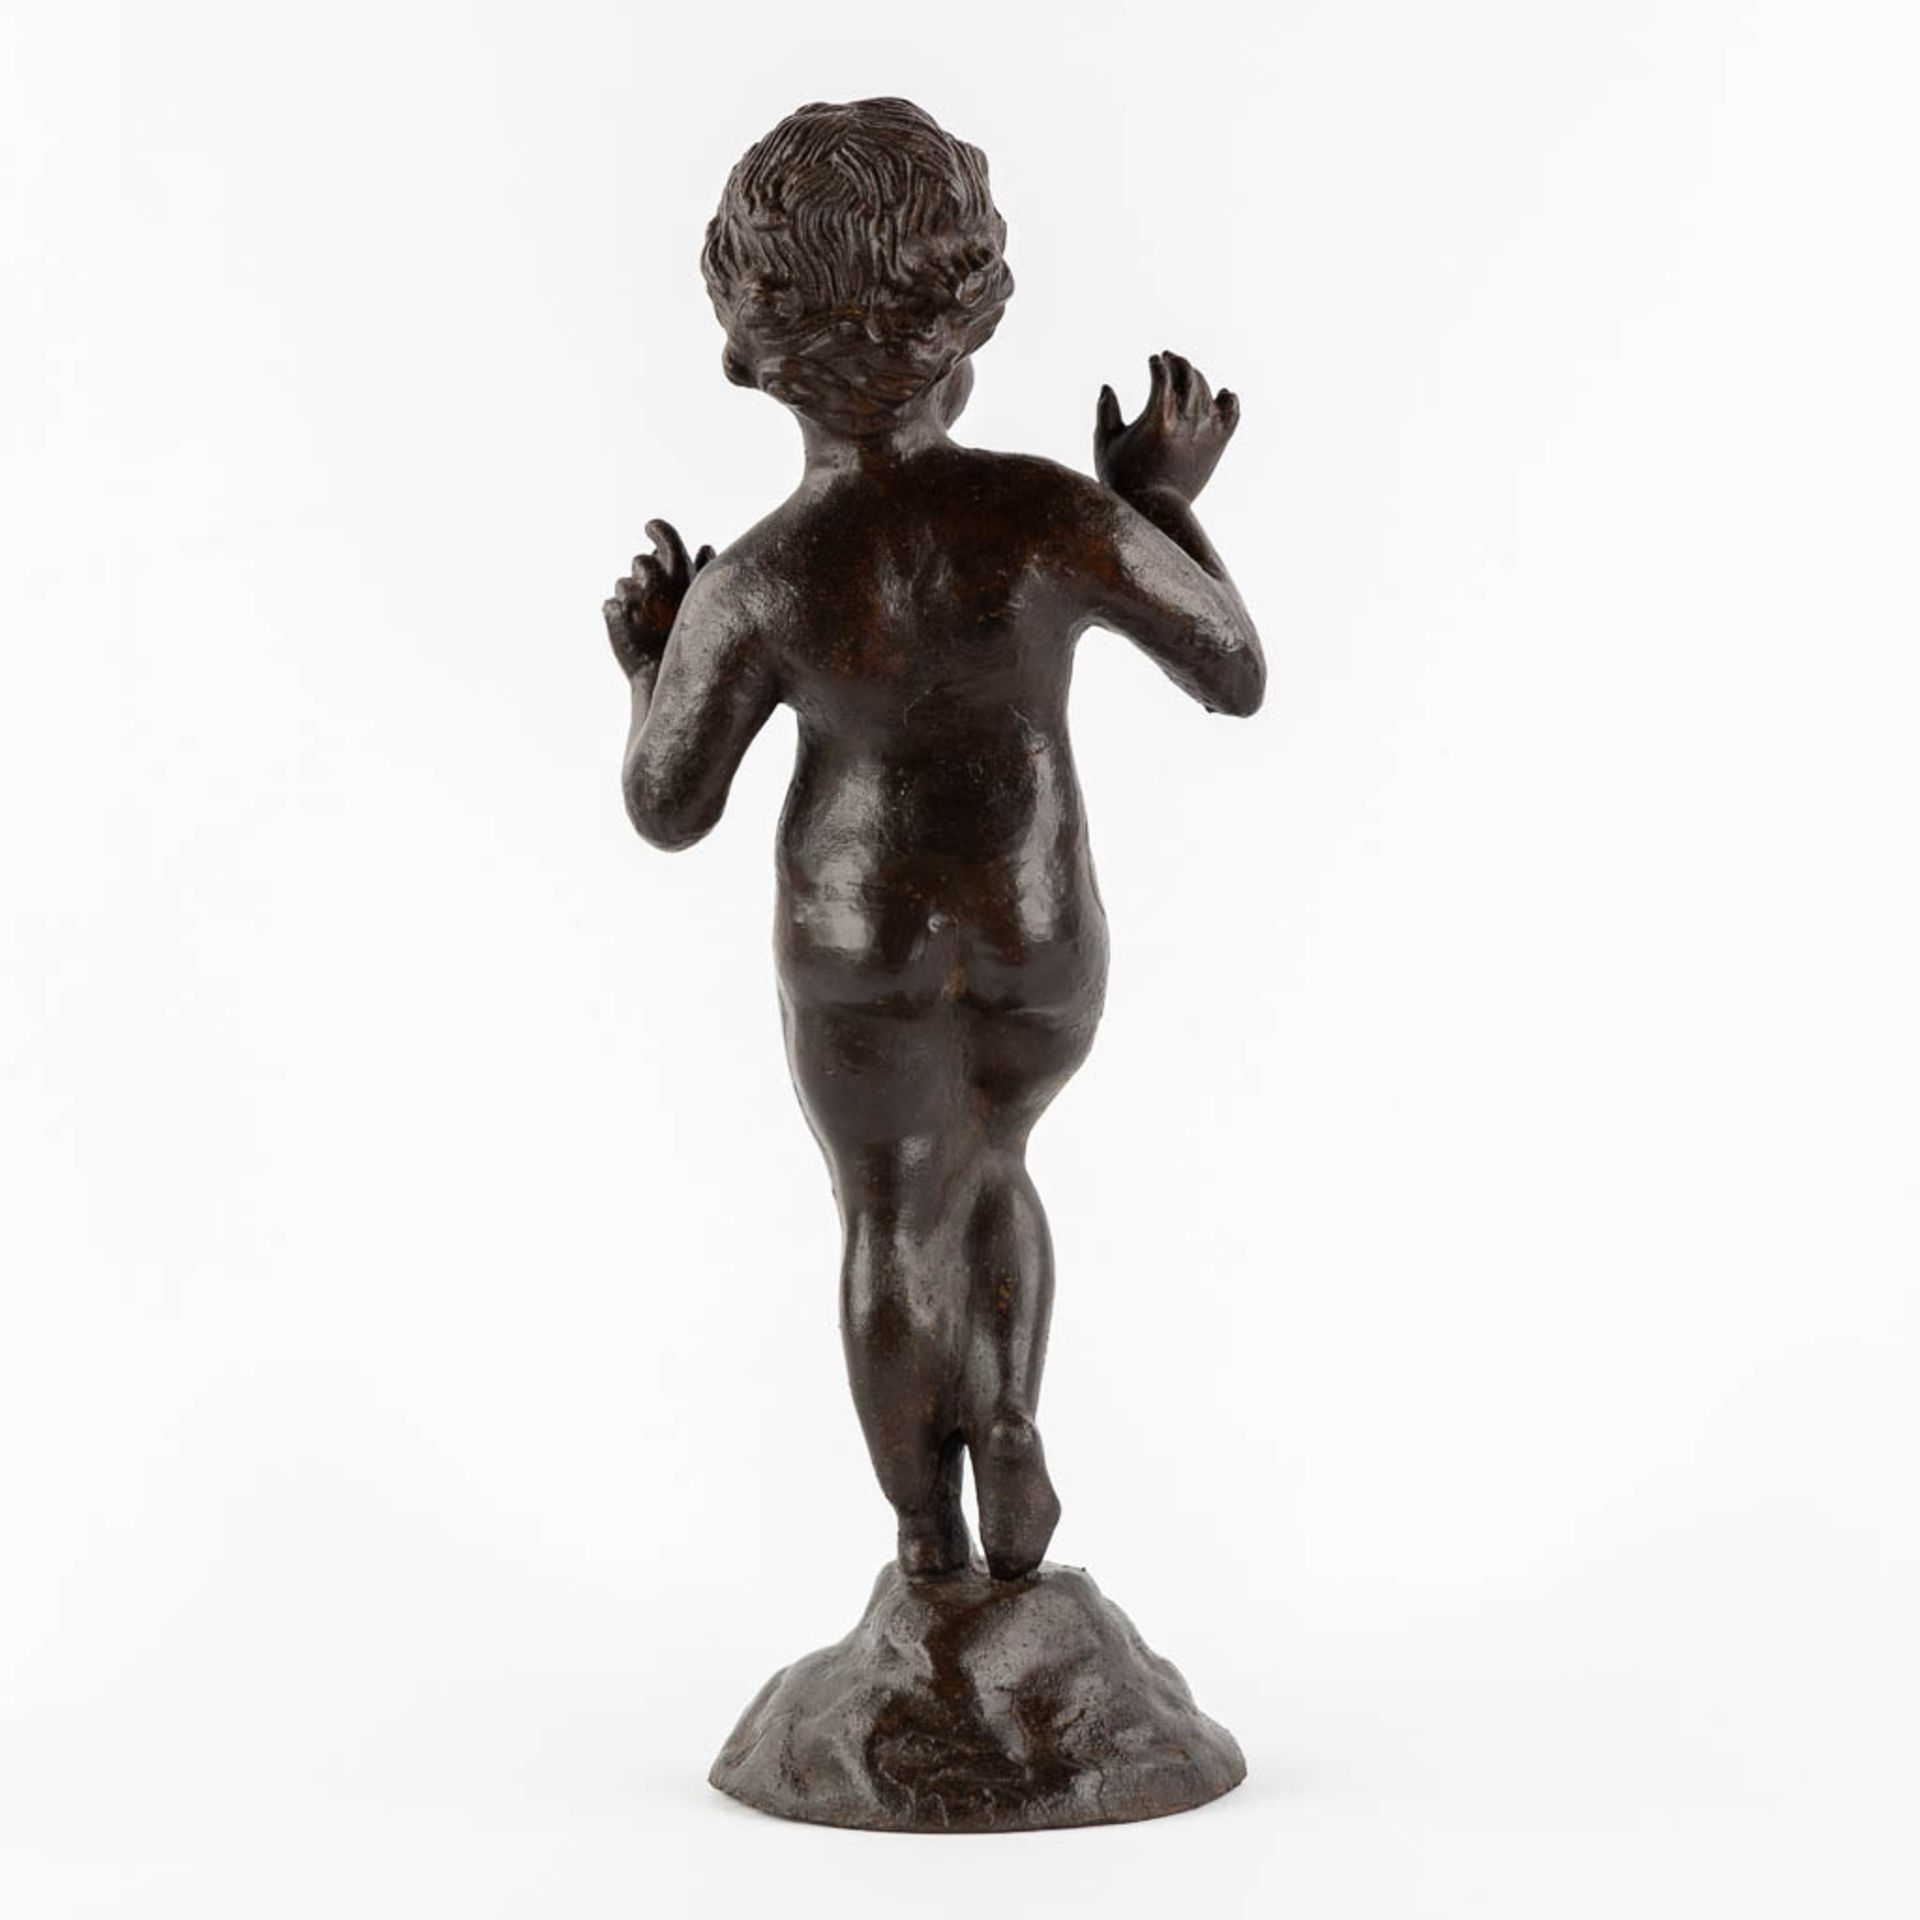 Figurine of a boy, cast-iron. (W:17 x H:53 cm) - Image 5 of 8